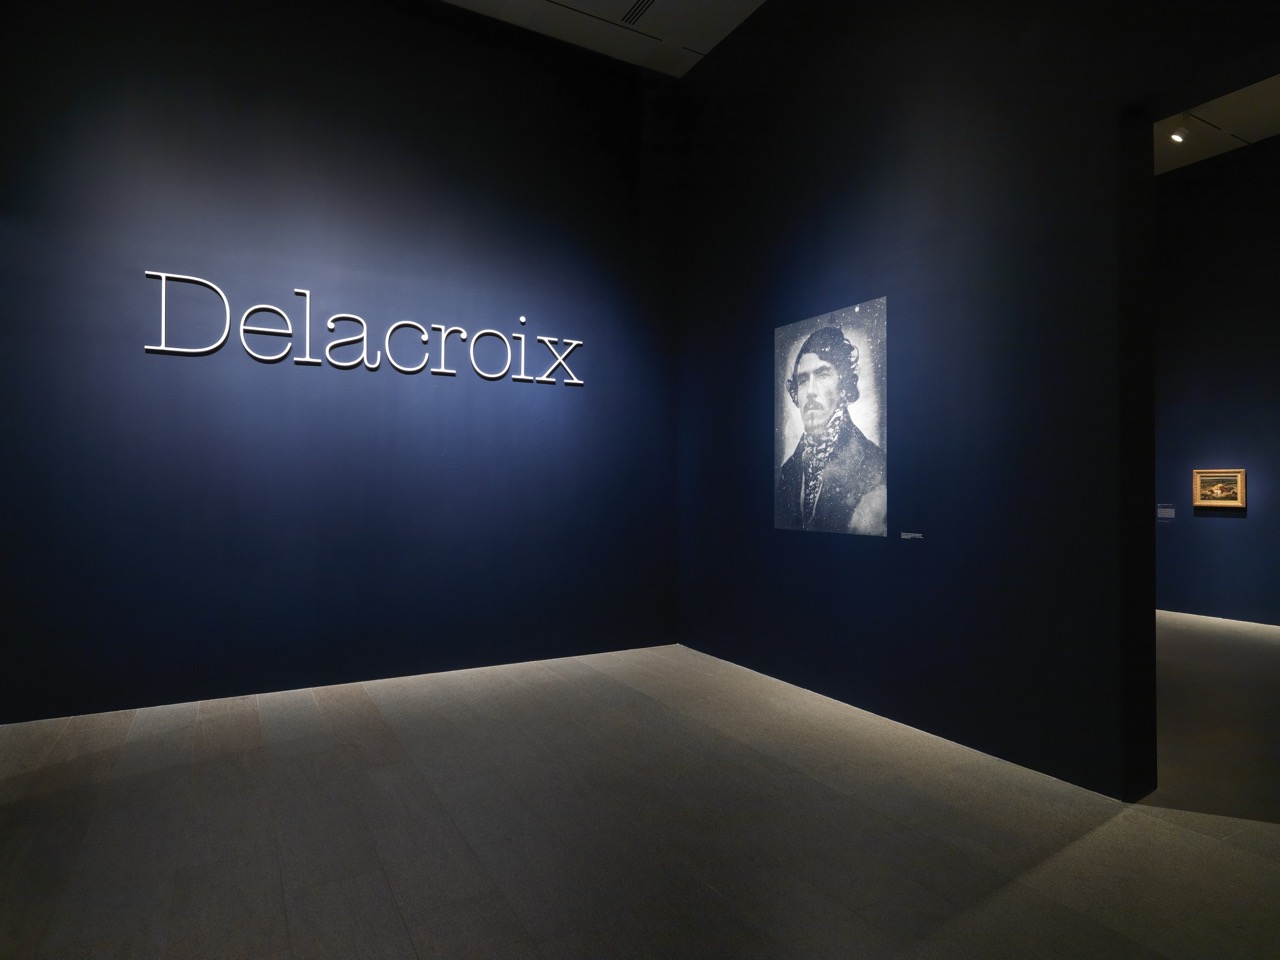 delacroix meaning